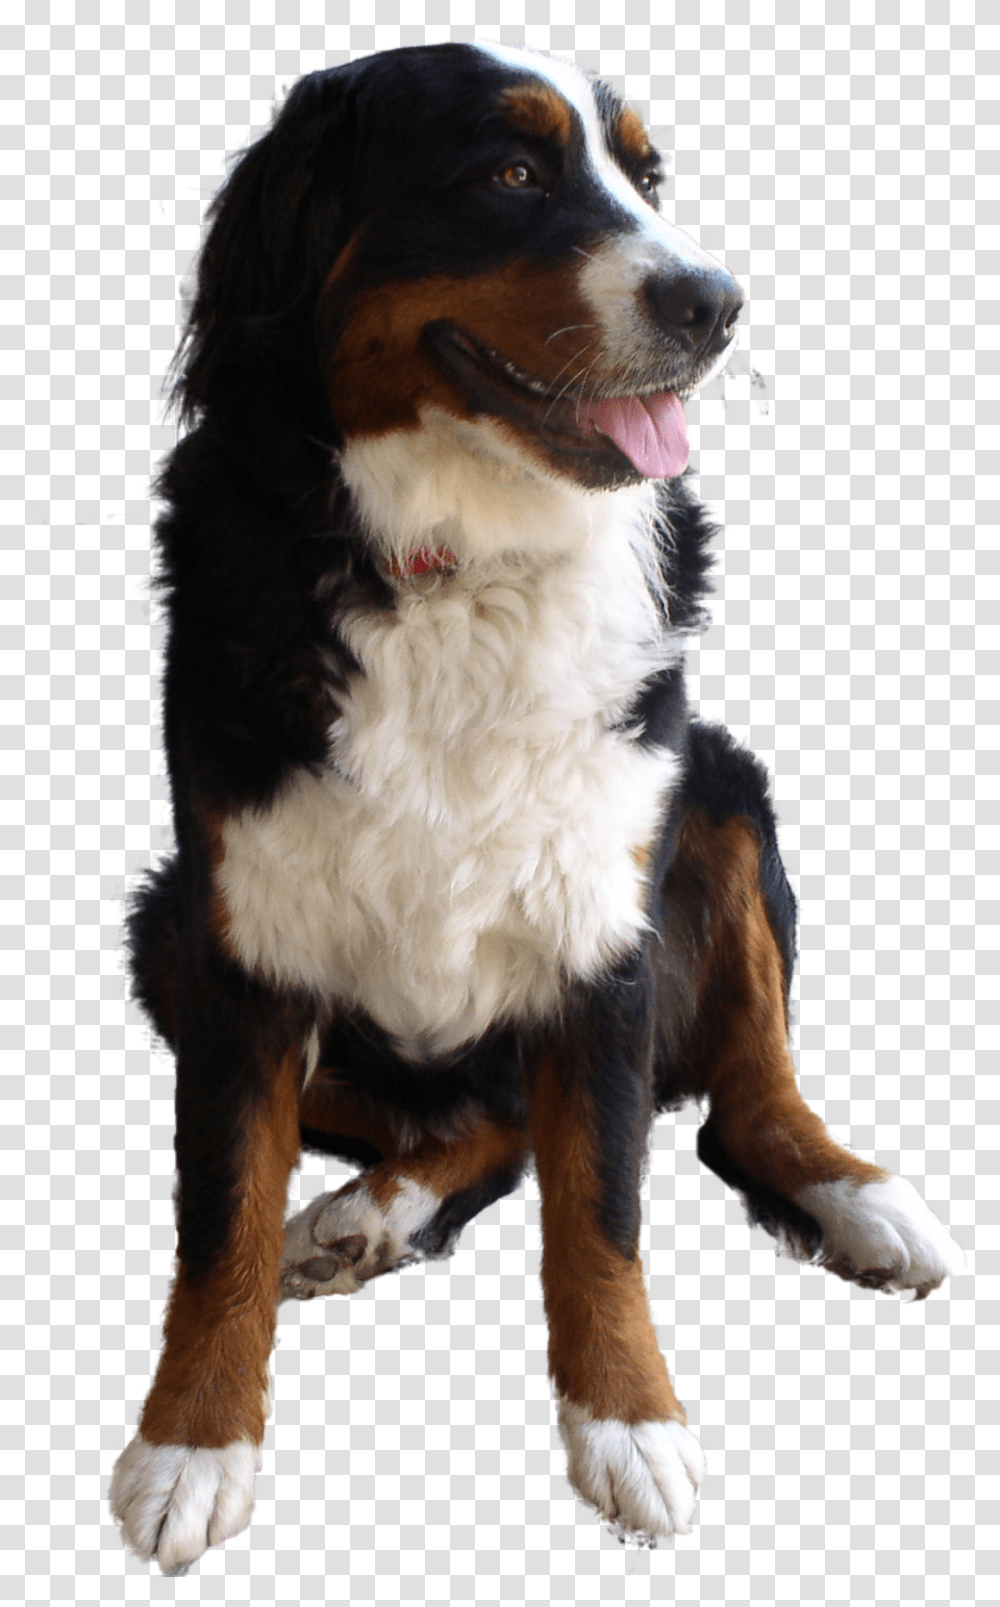 Cute Dog Image High Res Dog Image Transparent Png